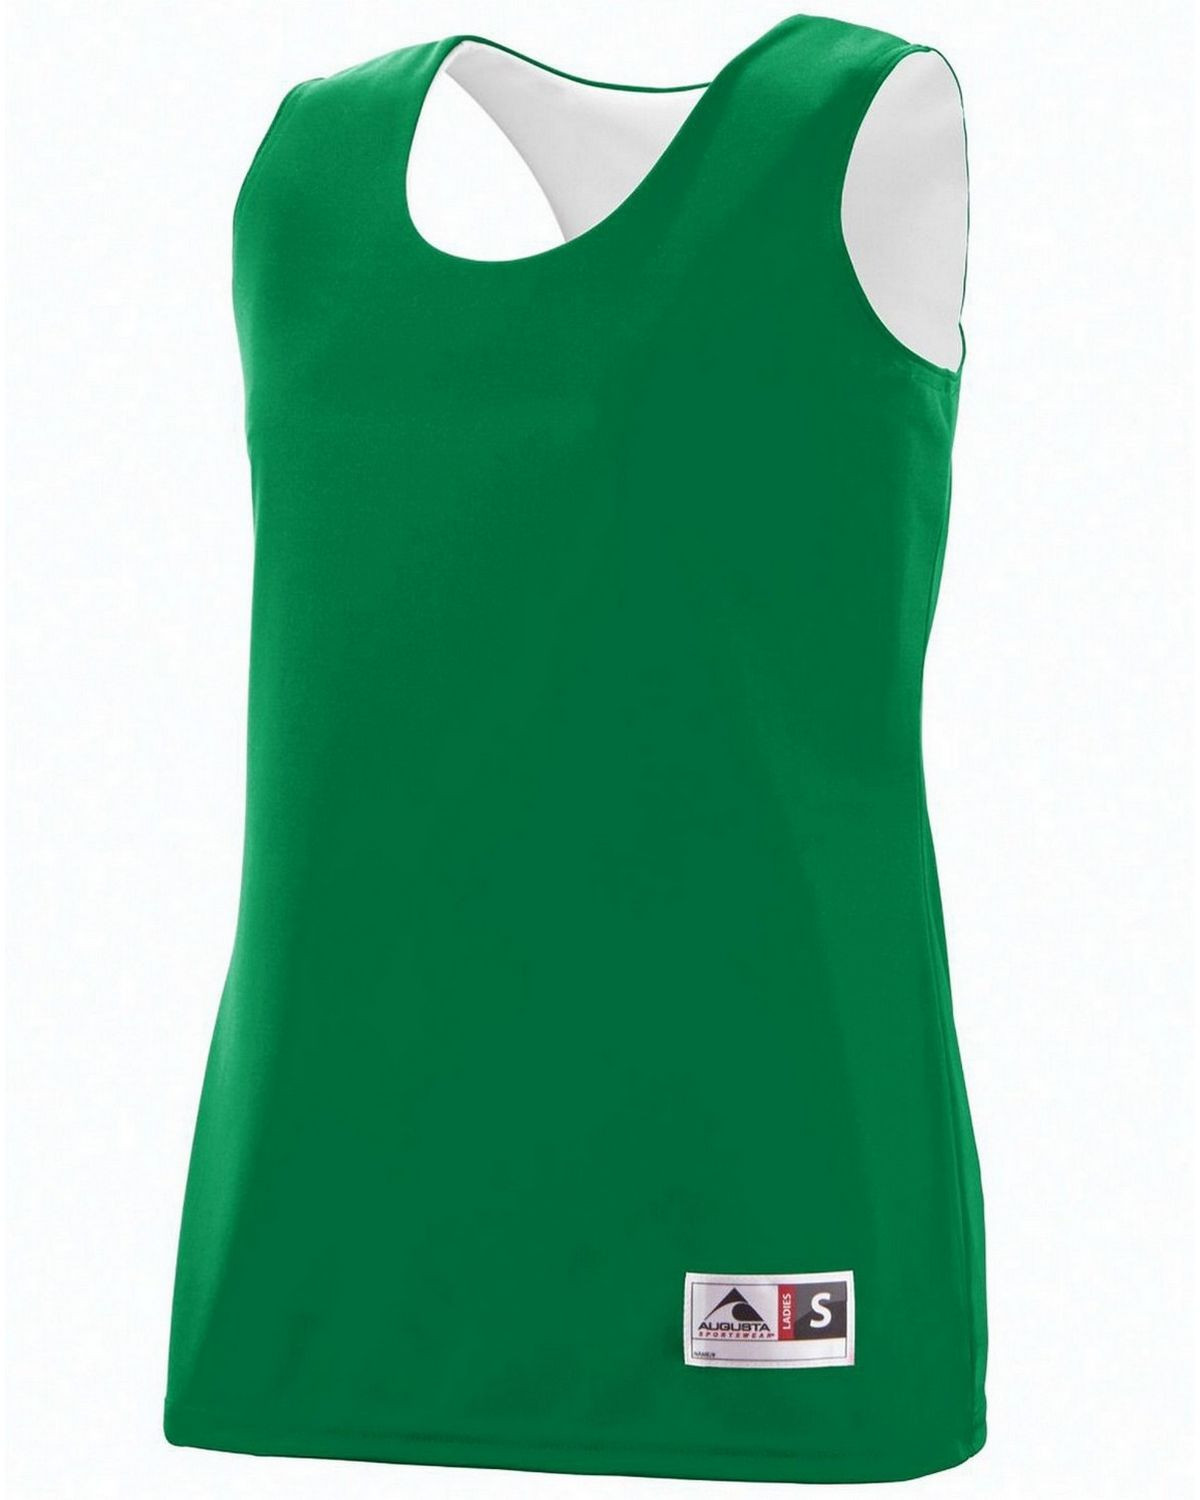 Augusta Sportswear 147 Women's Wicking Polyester Reversible Sleeveless Jersey - Kelly/White - S #sleeveless